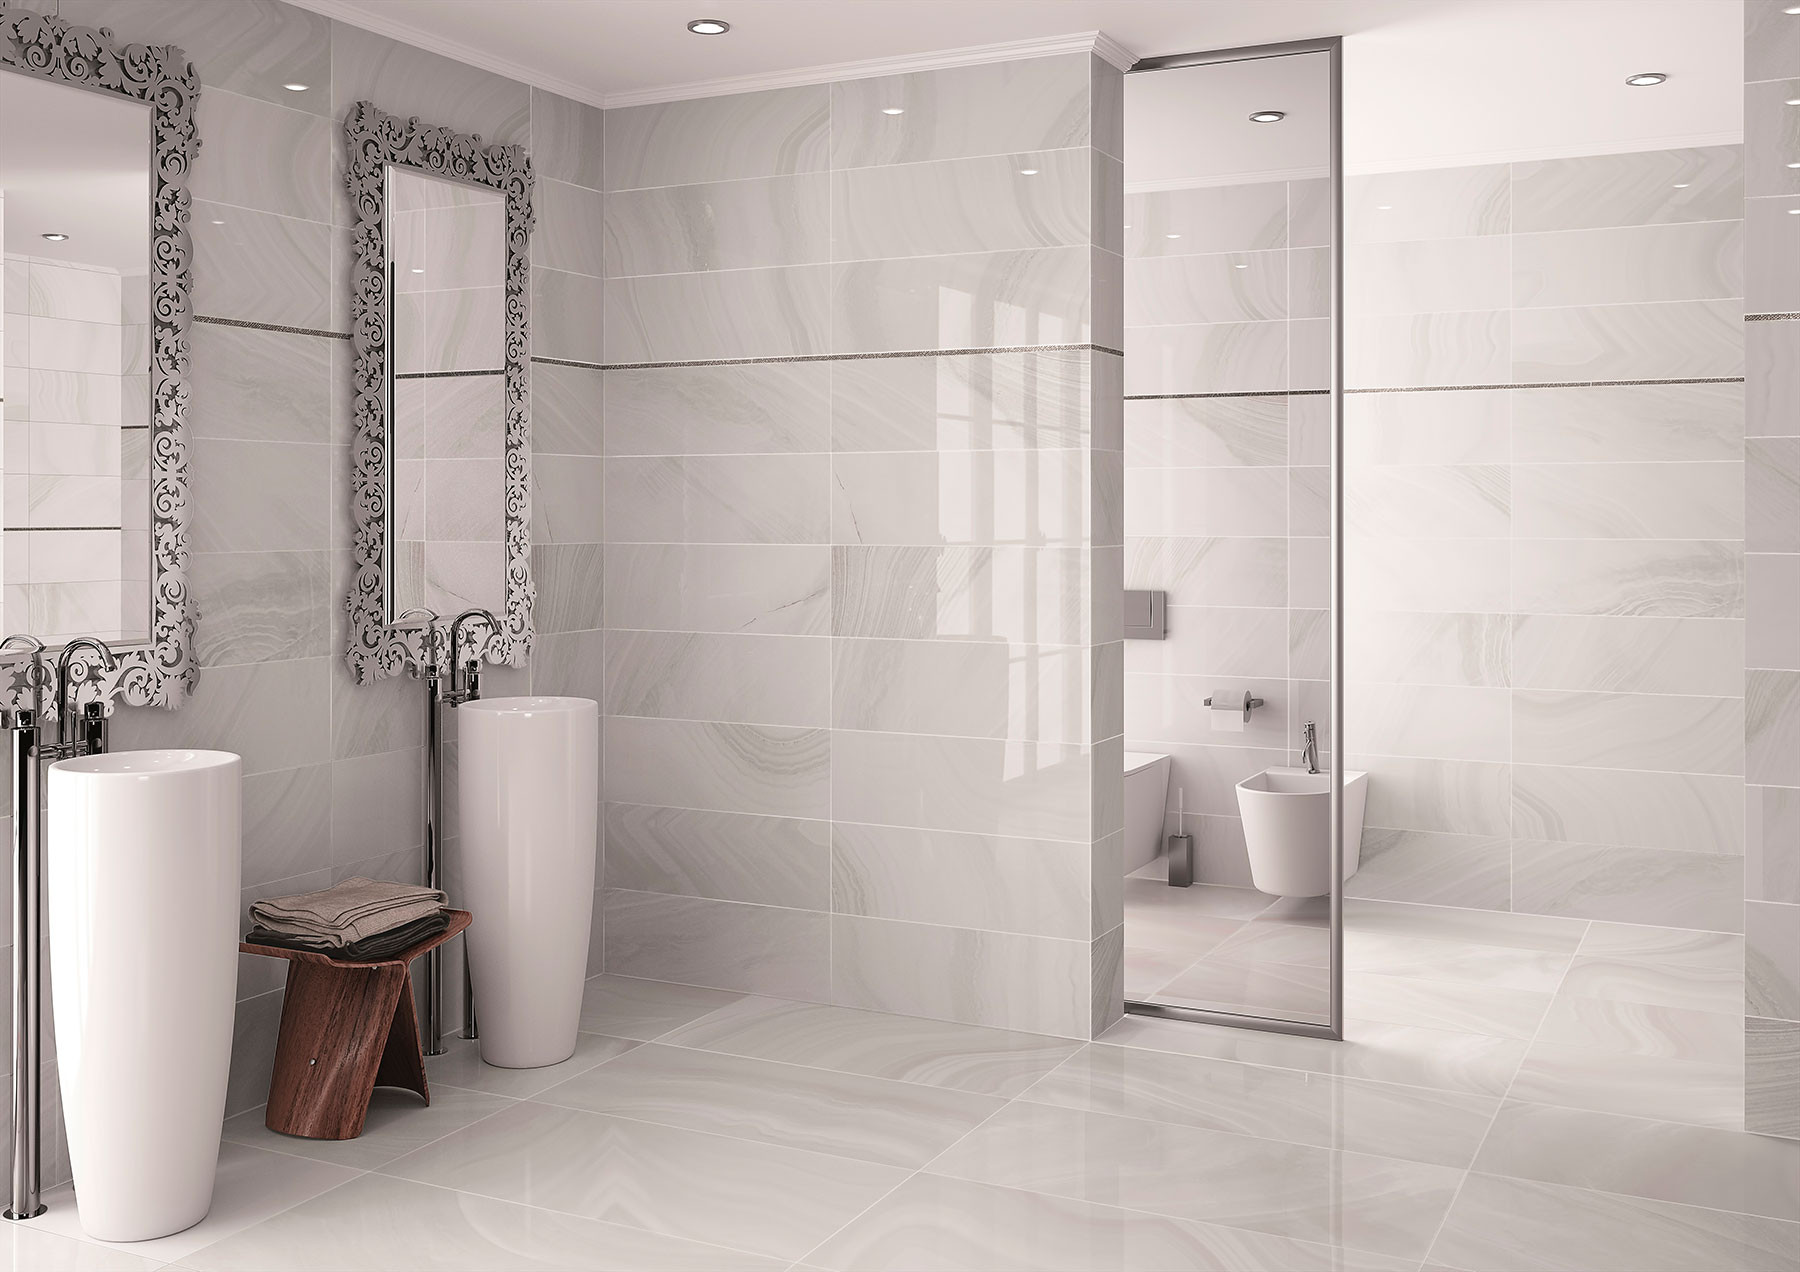 Images Of Bathroom Tile
 Bathroom Tiles Tilbury Tiles